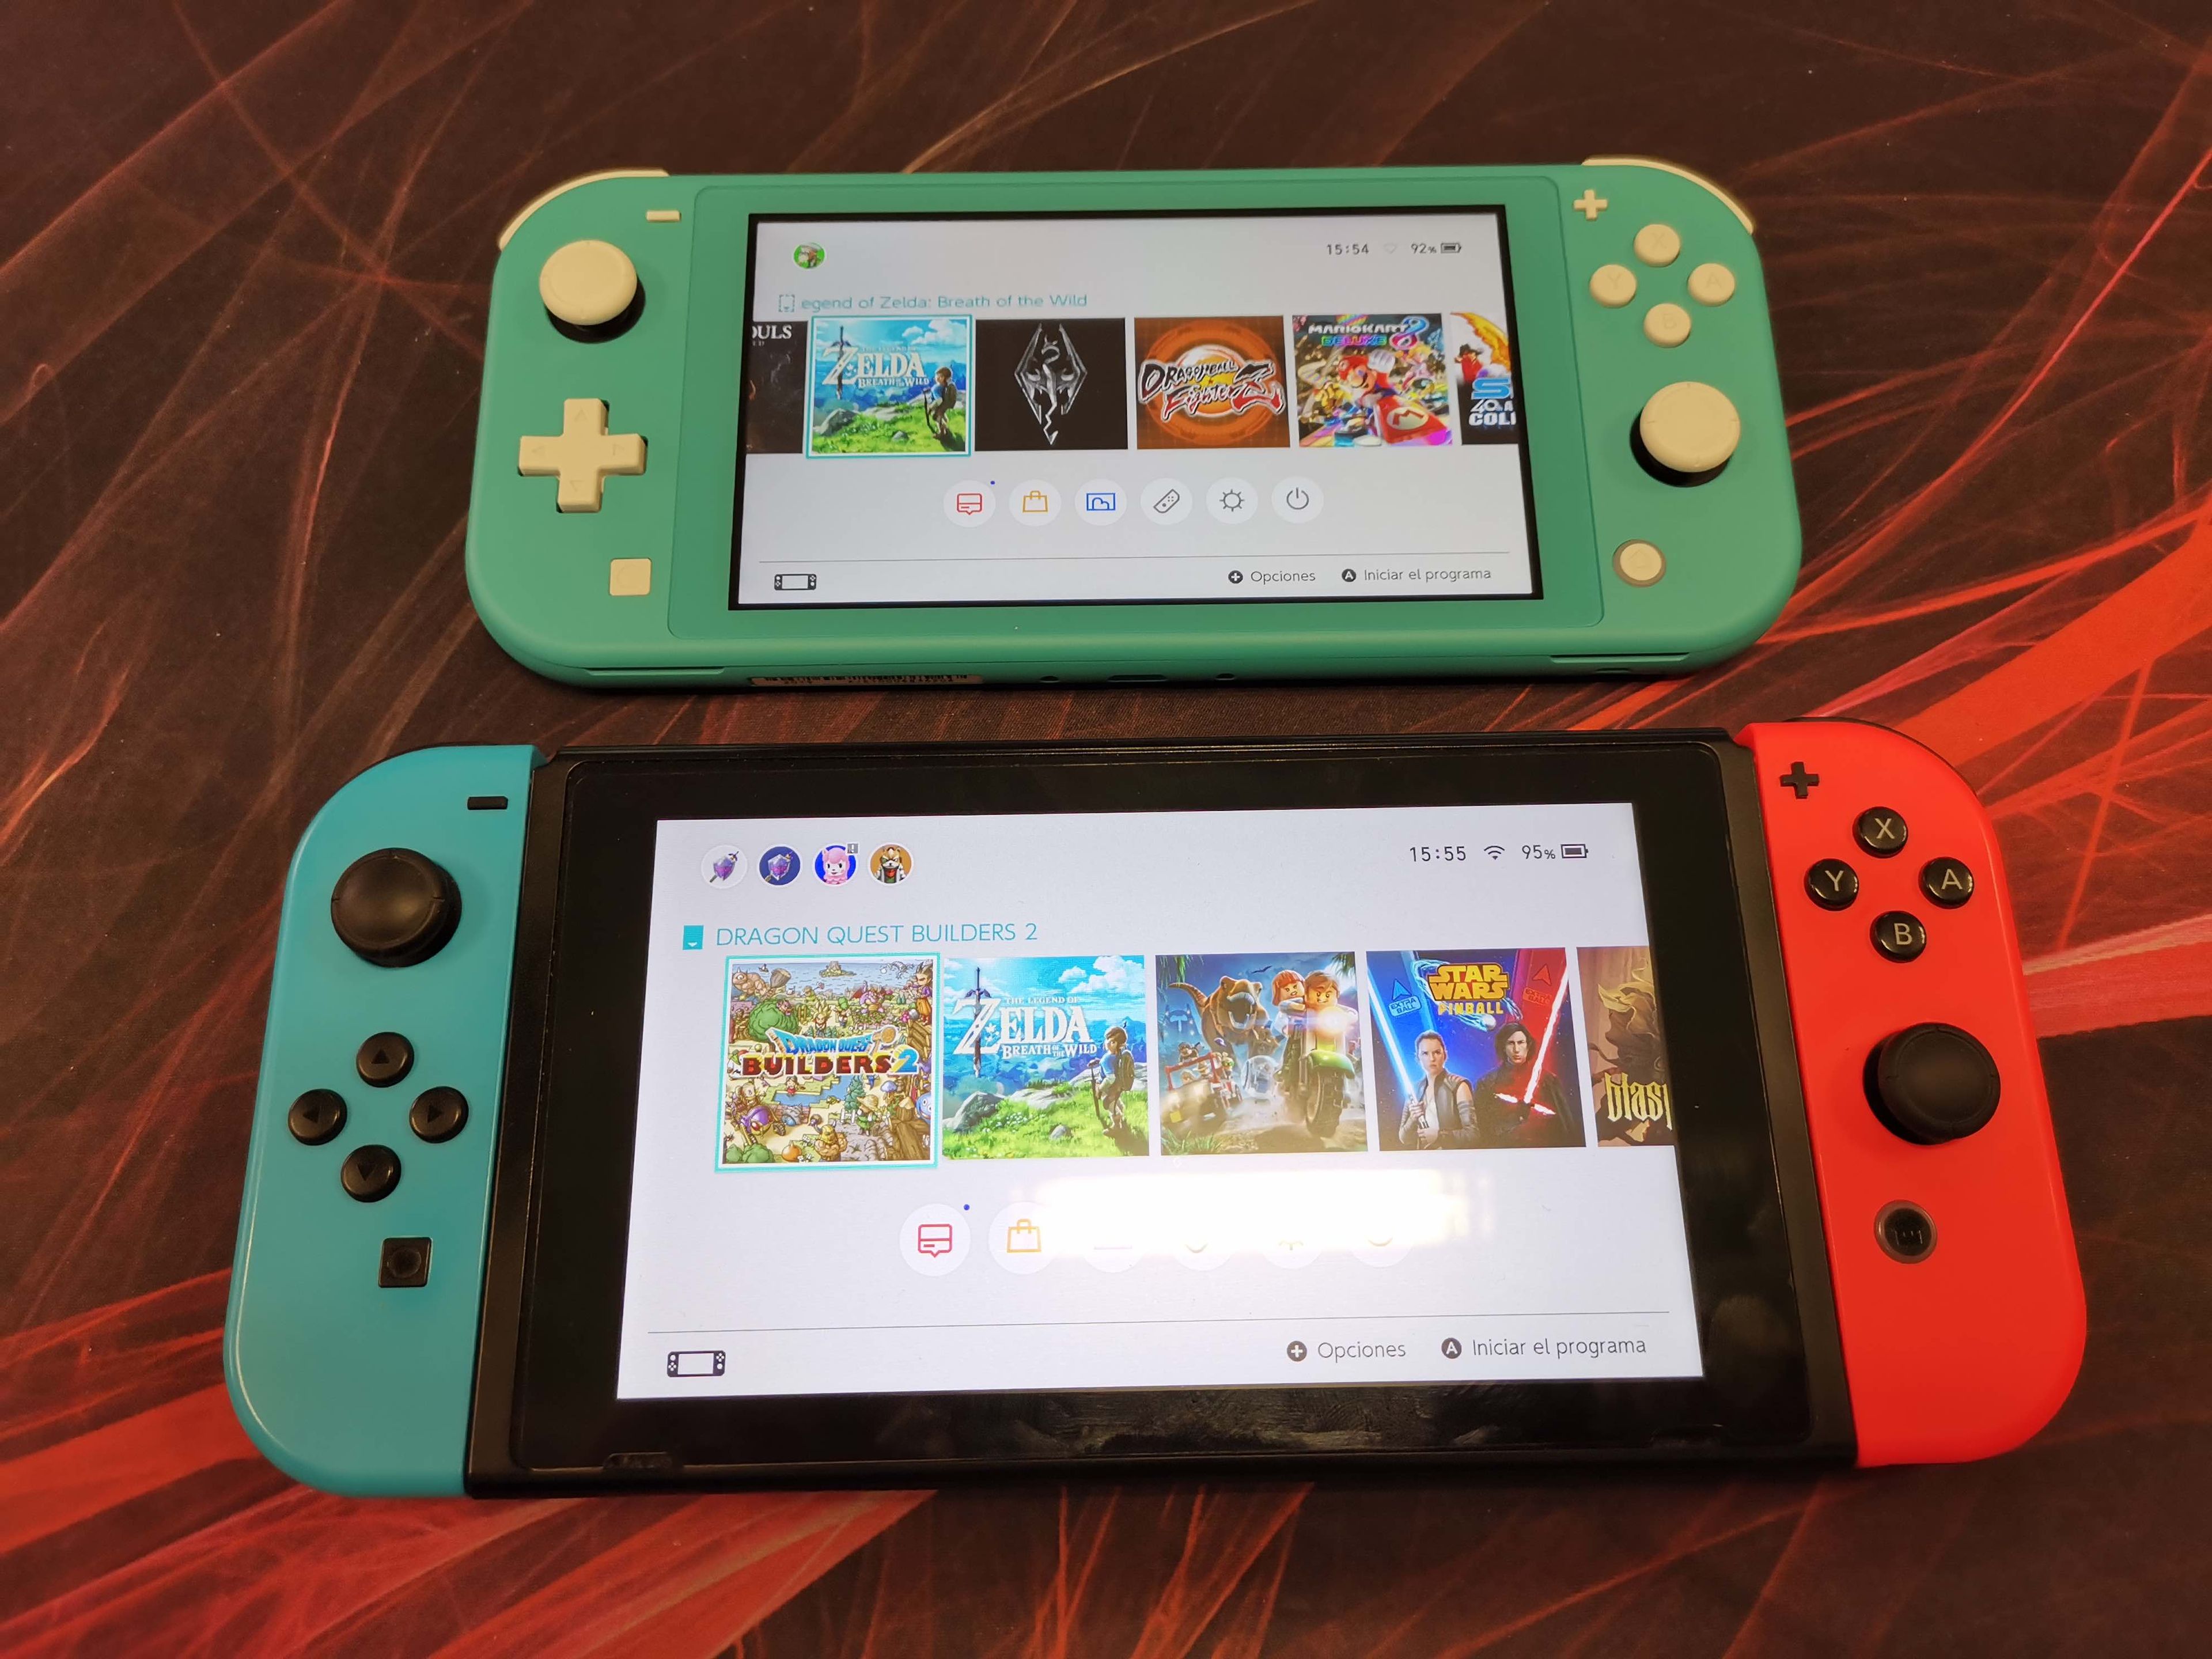 Nintendo Switch Lite vs Nintendo Switch